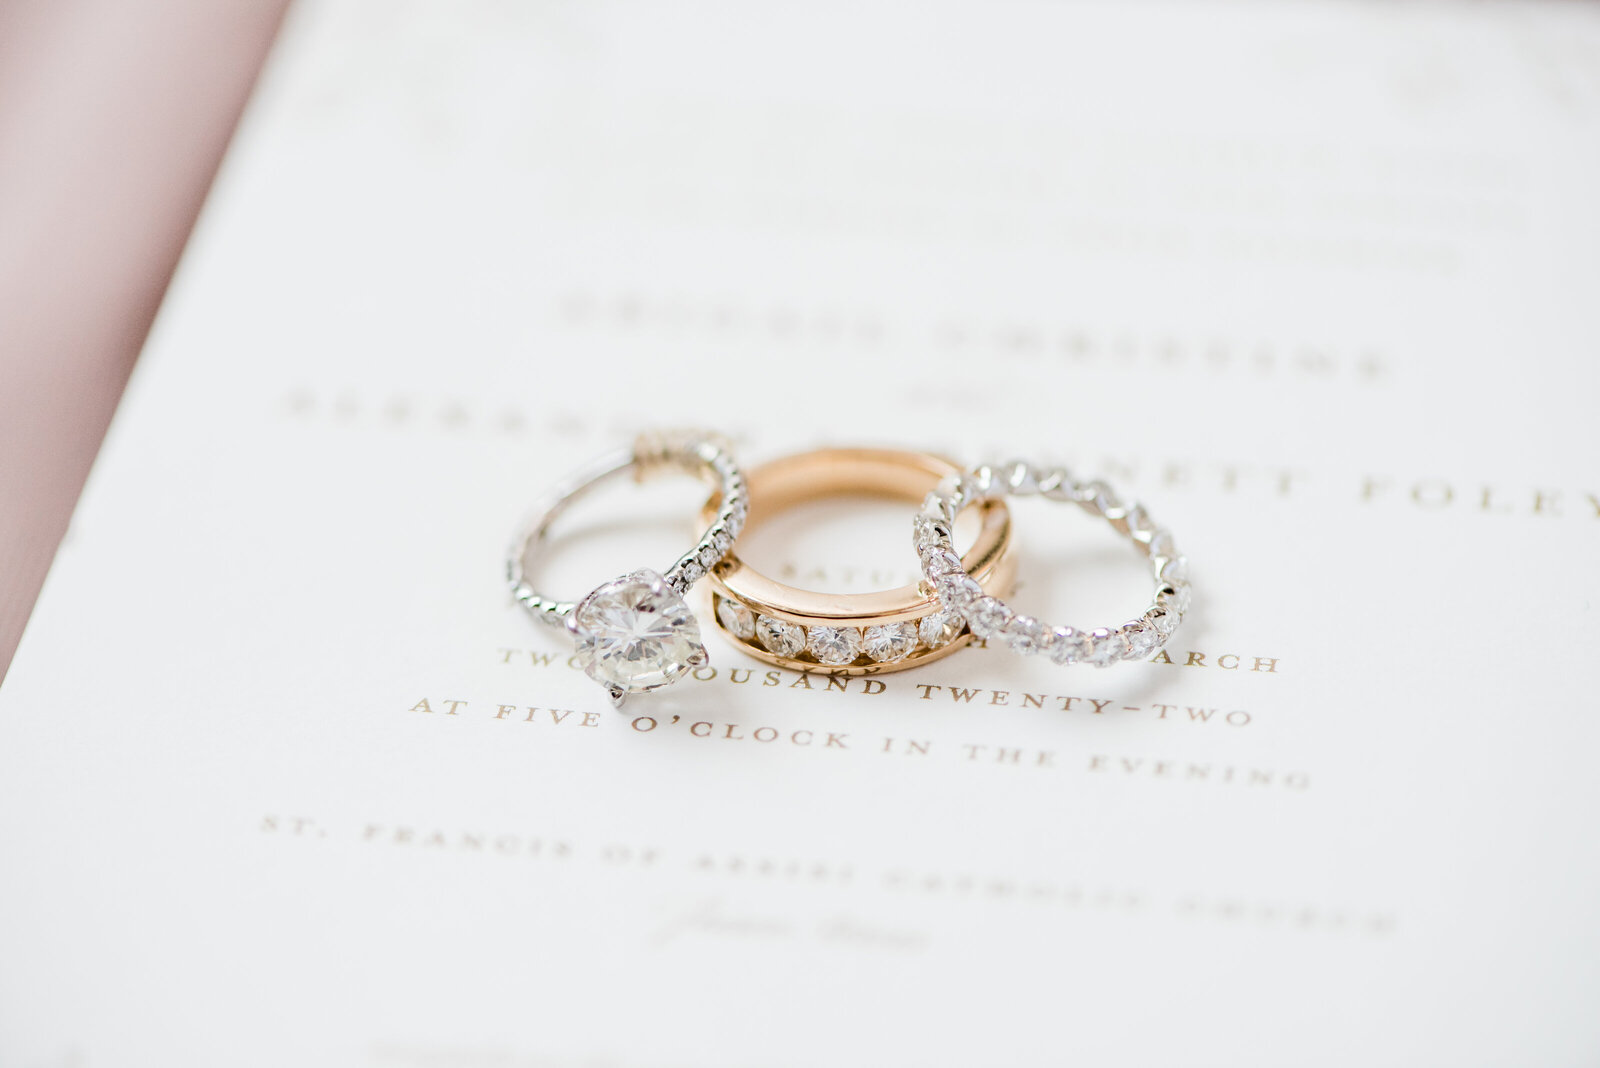 Wedding rings lay on wedding stationery